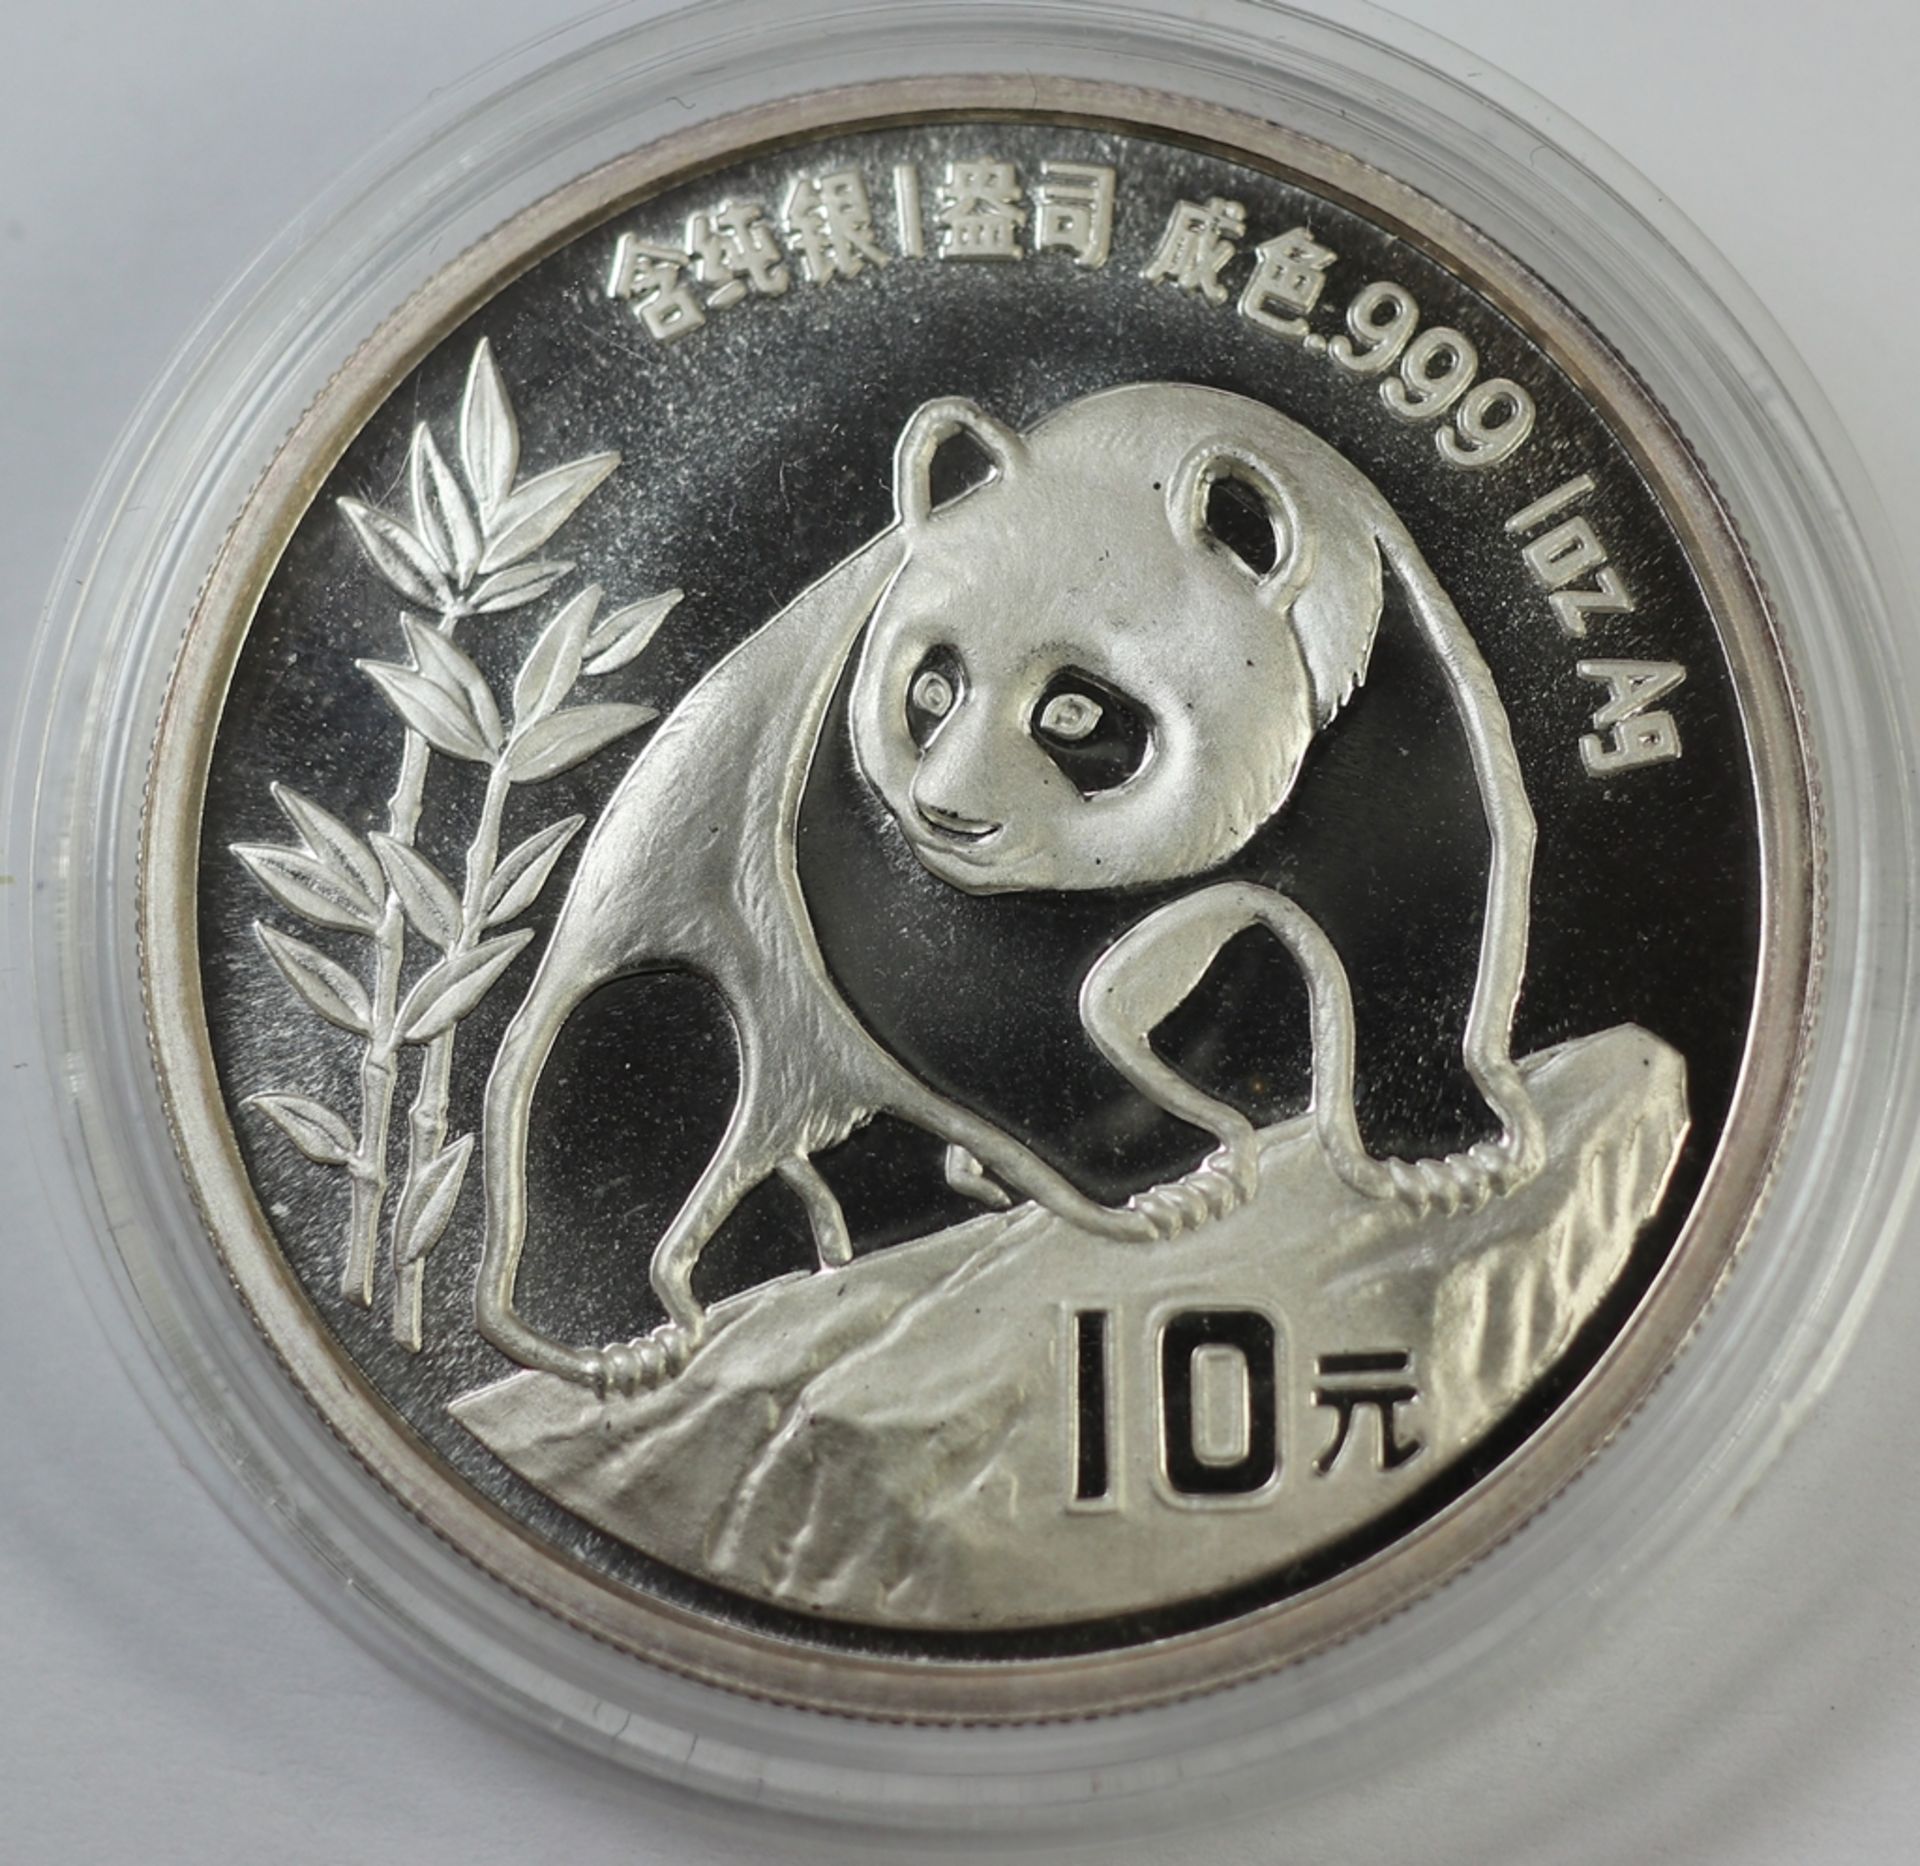 10 Yuan, China Panda in Kapsel 1oz, 1990